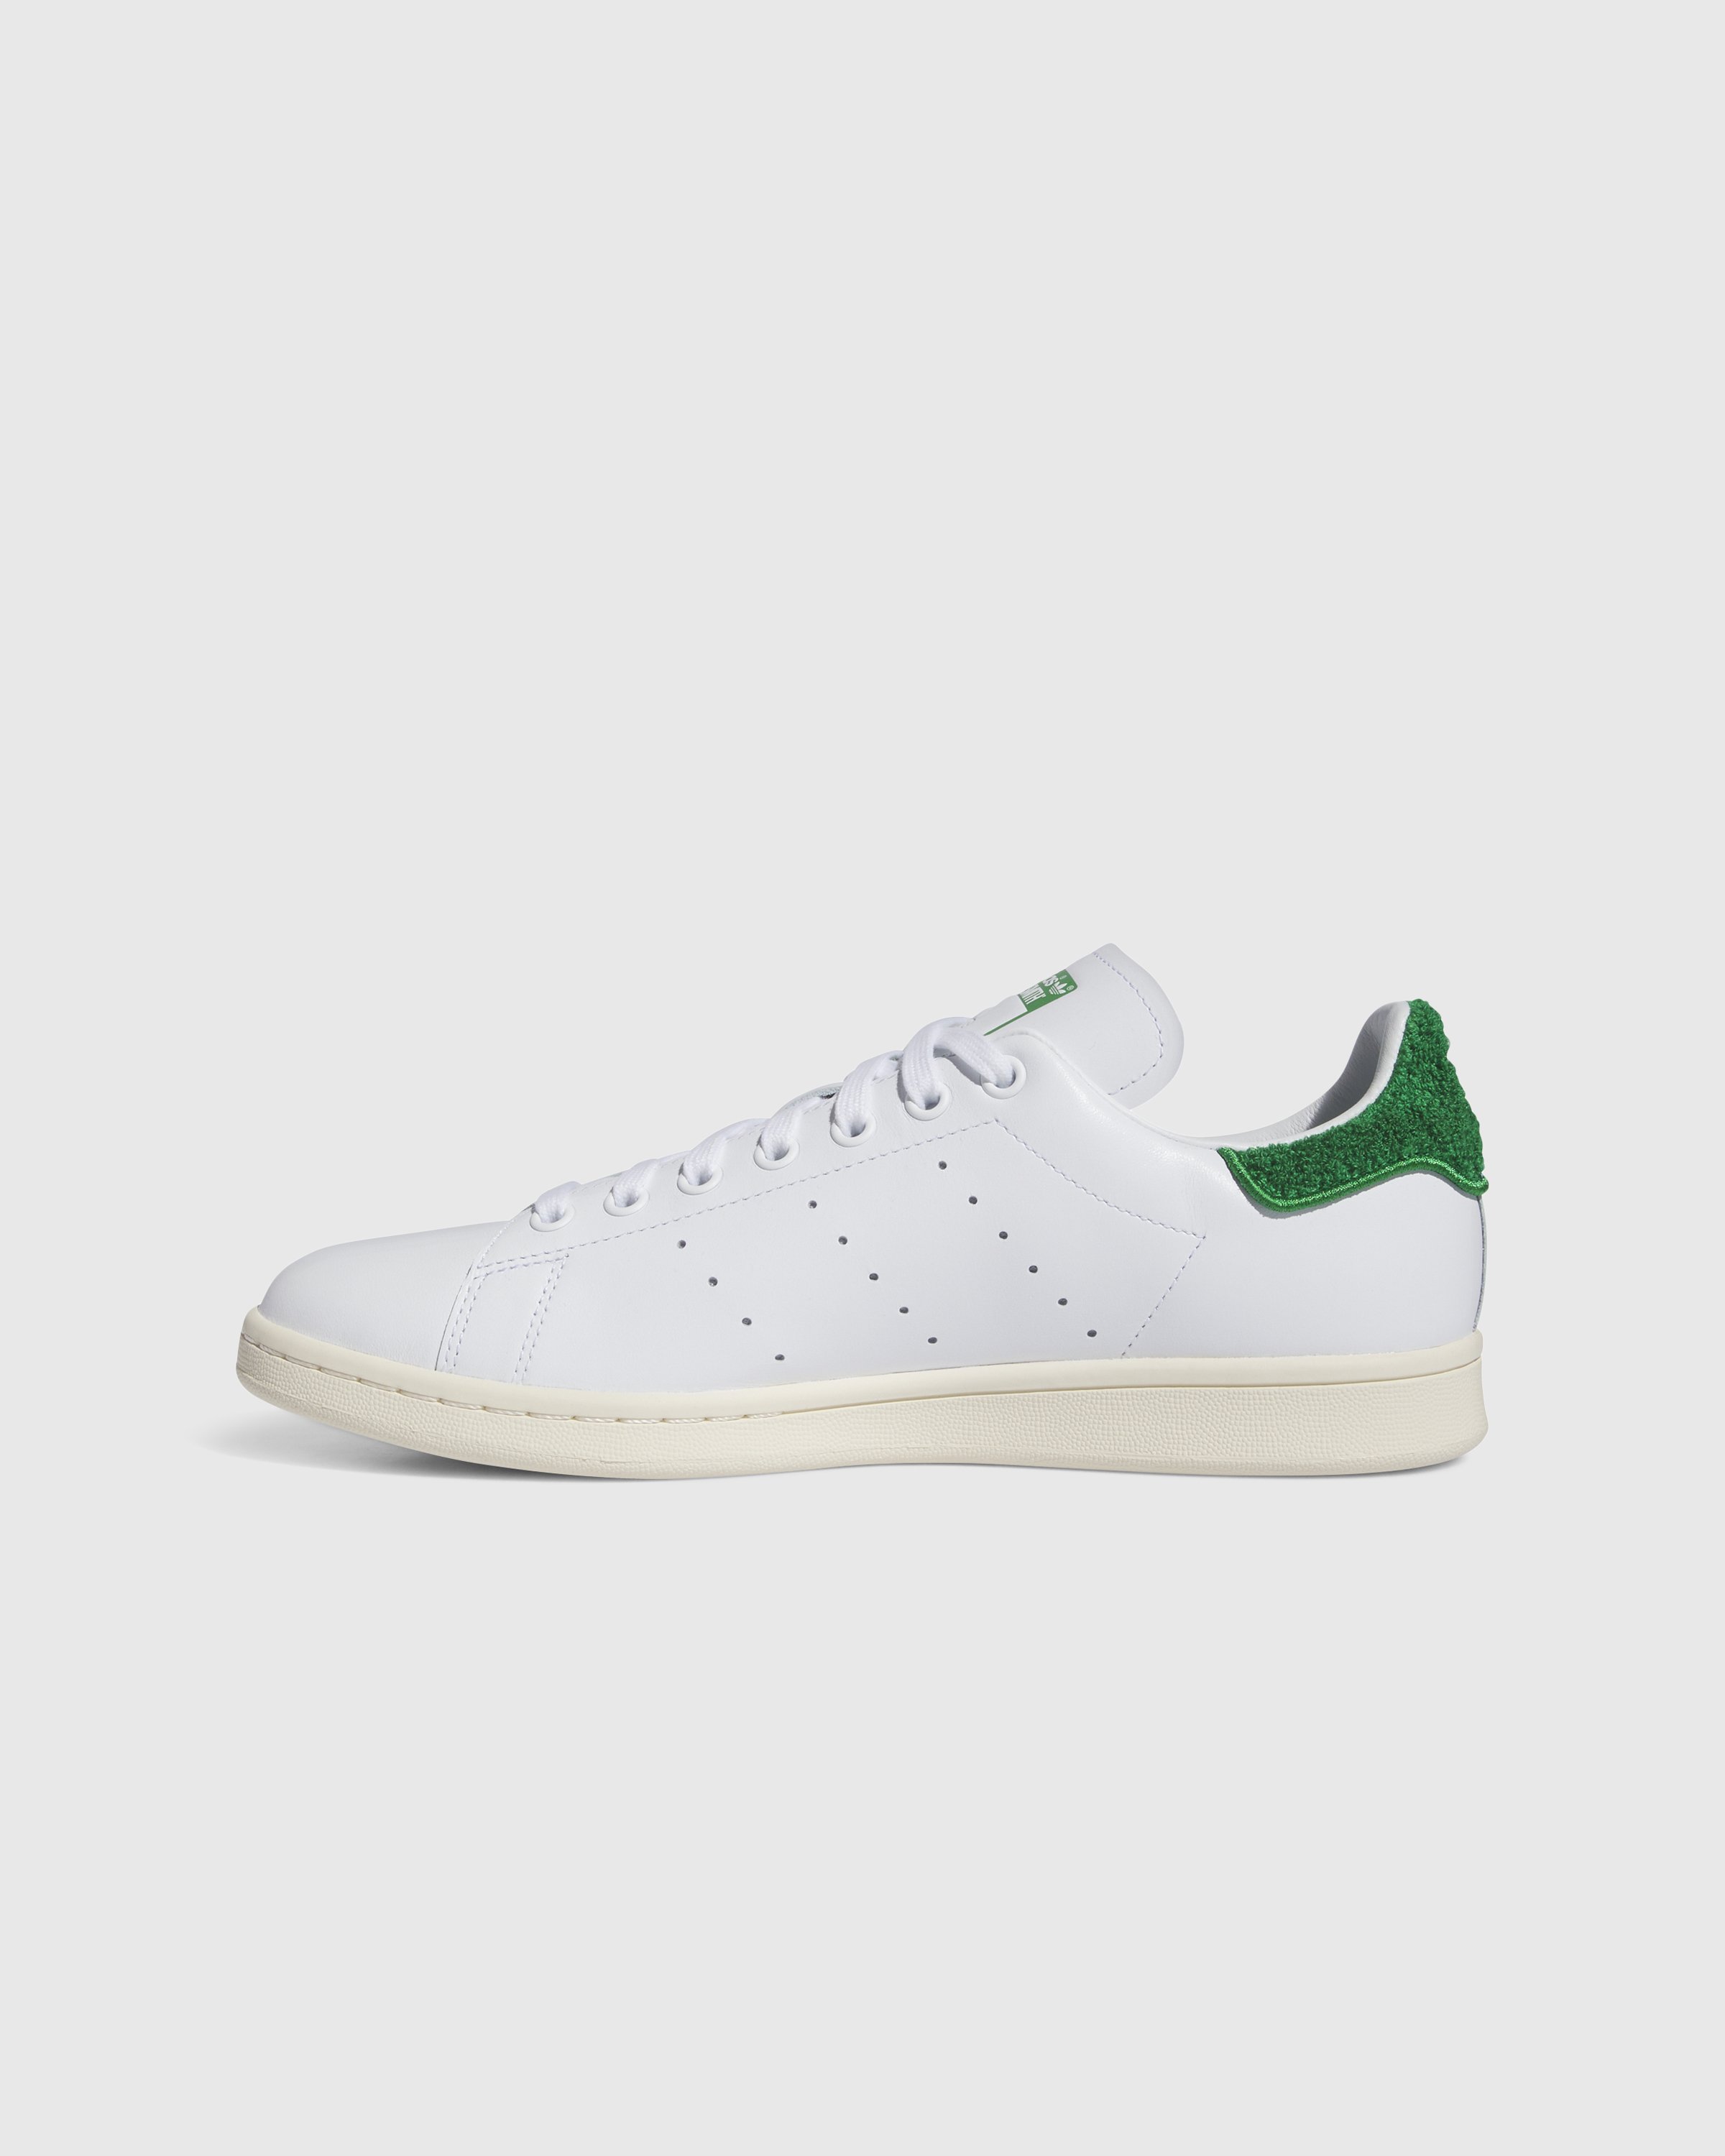 Adidas - Stan Smith Homer Simpson White/Green - Footwear - White - Image 2